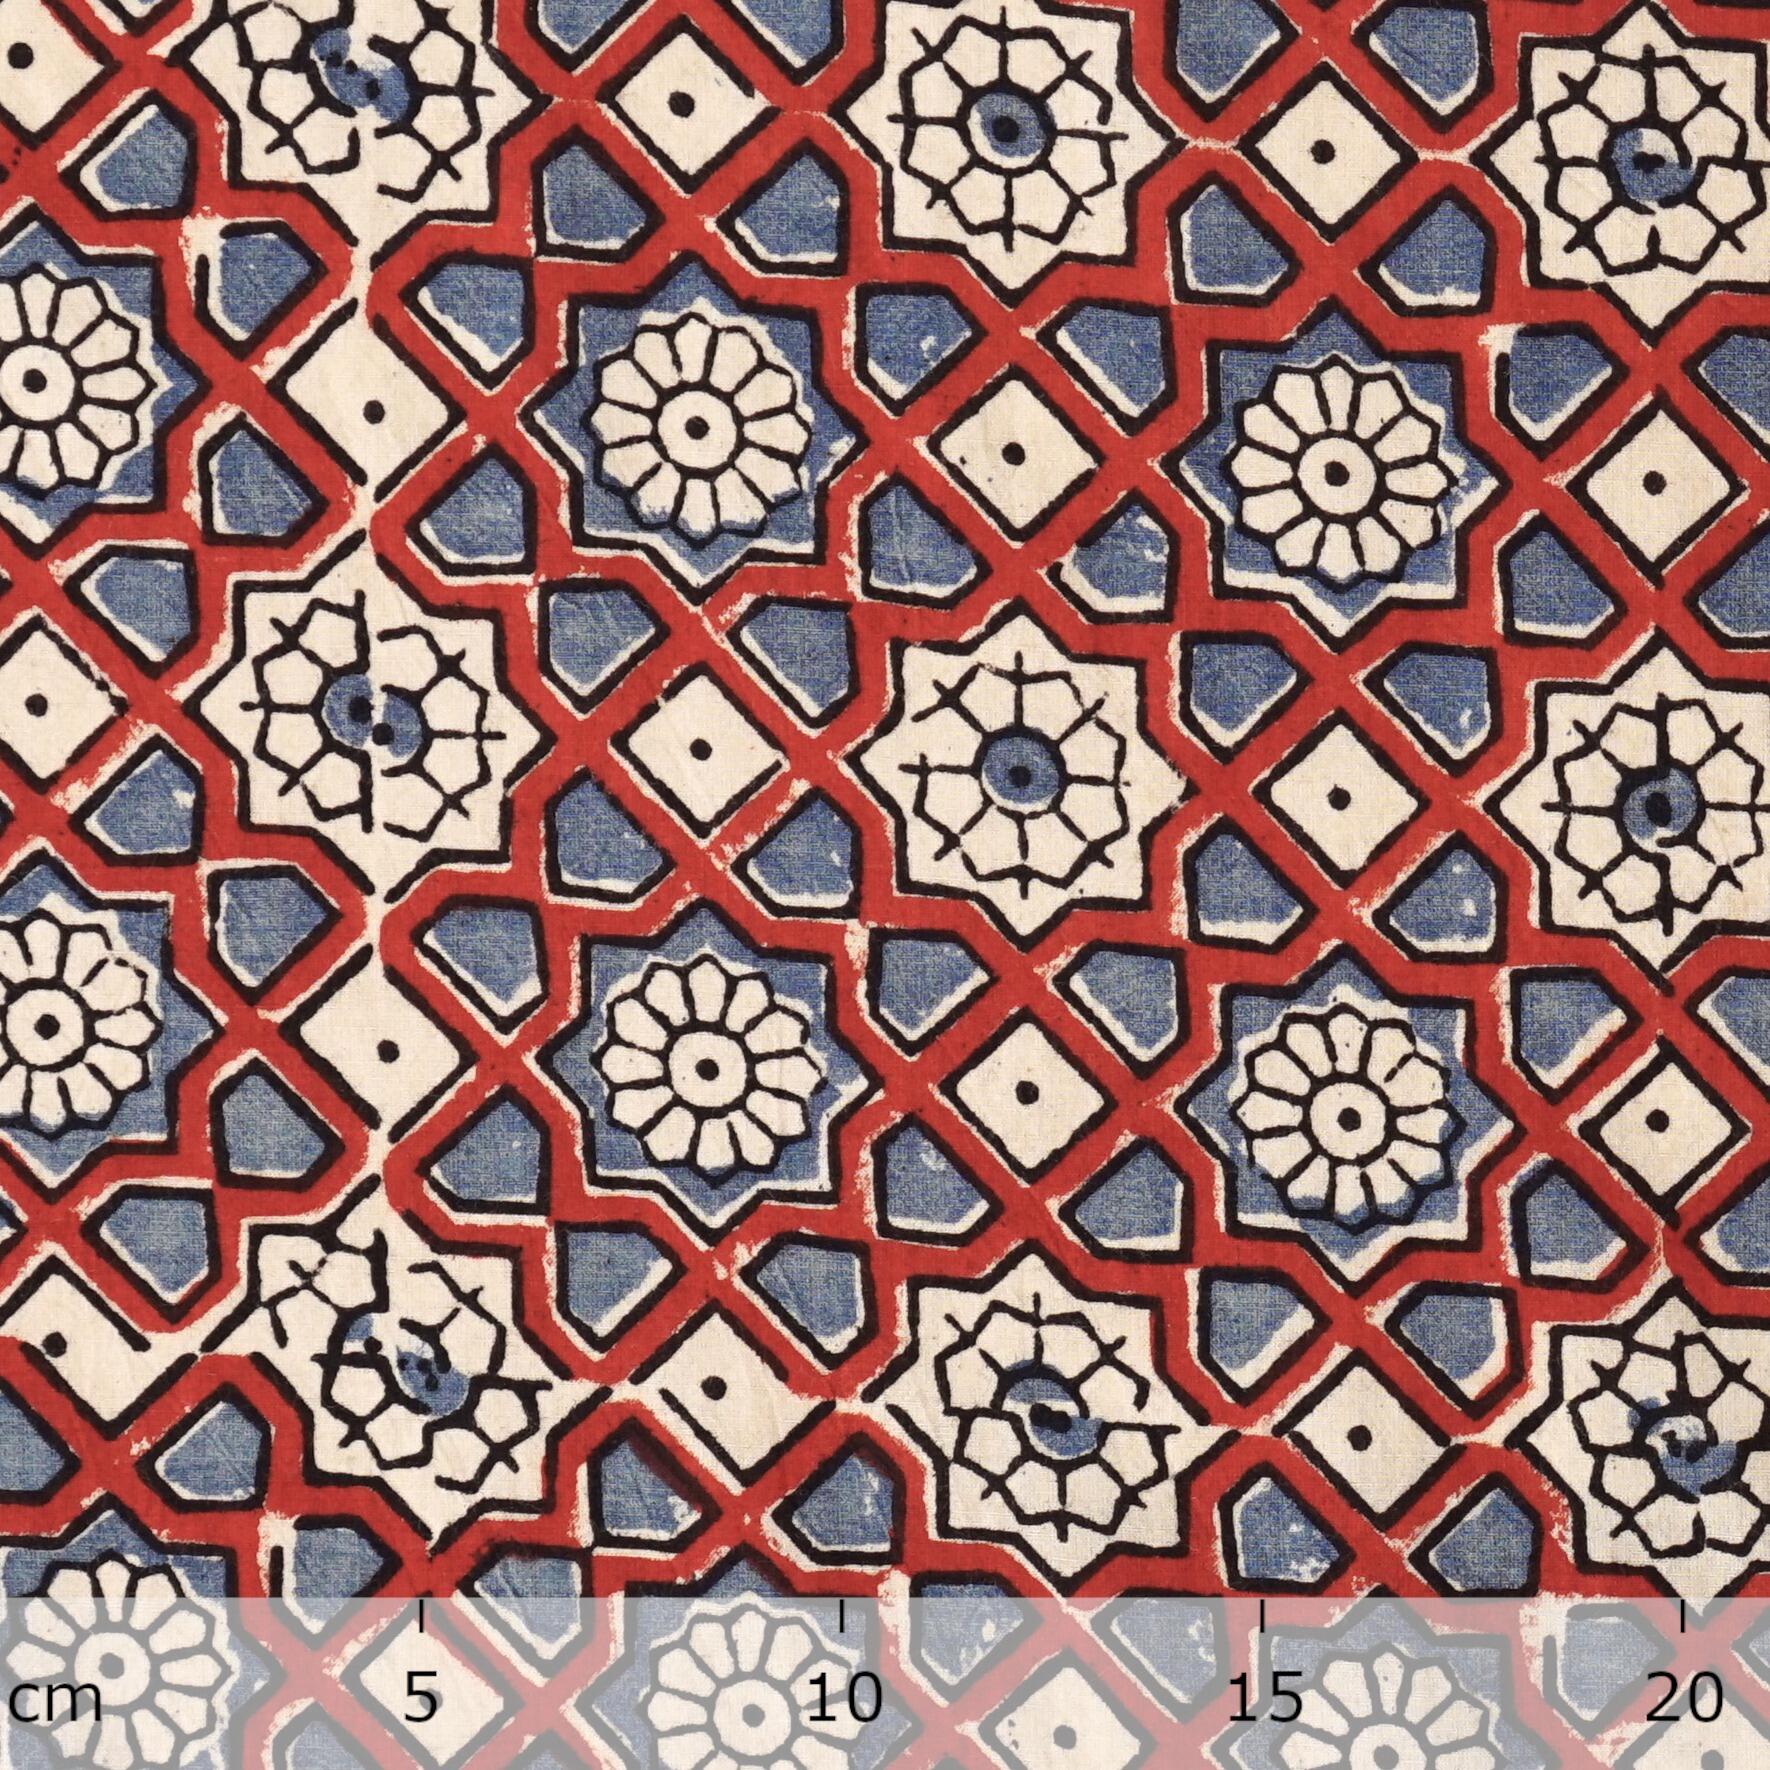 Block Printed Fabric, 100% Cotton, Ajrak Design: Beige Base, Blue, Red Mandala. Ruler